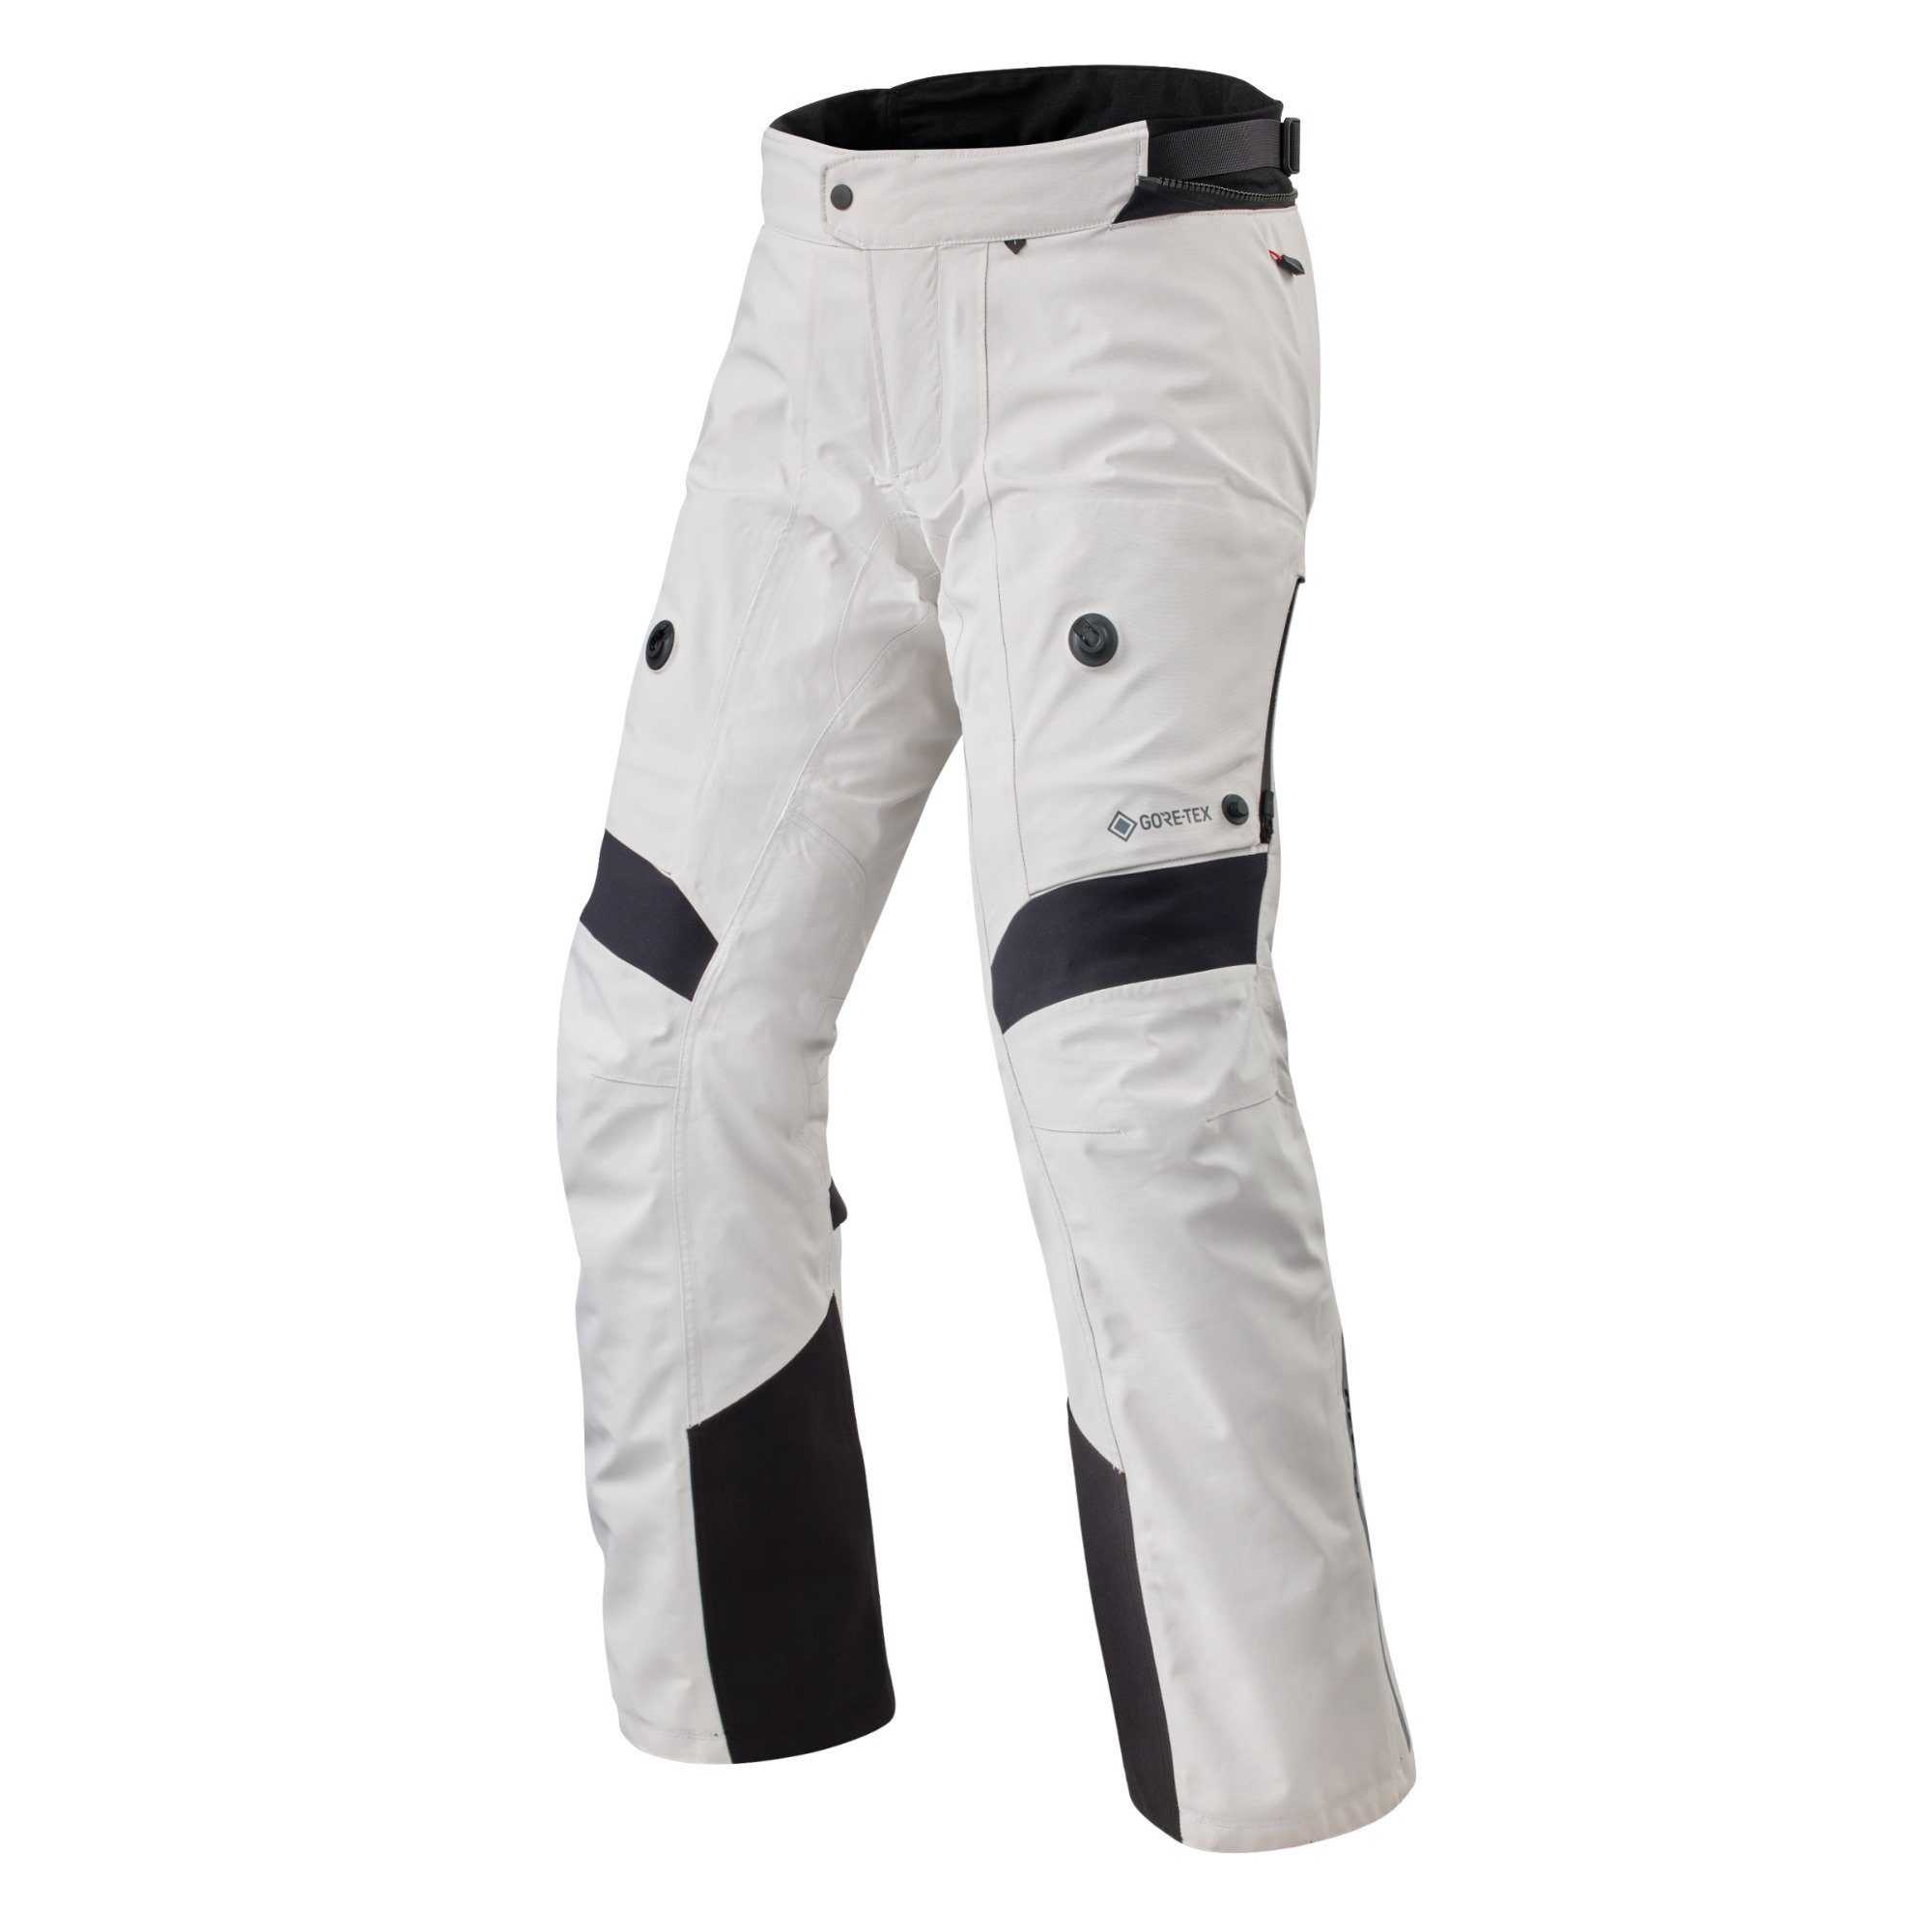 Image of REV'IT! Pants Poseidon 3 GTX Silver Black Standard Motorcycle Pants Size XL EN